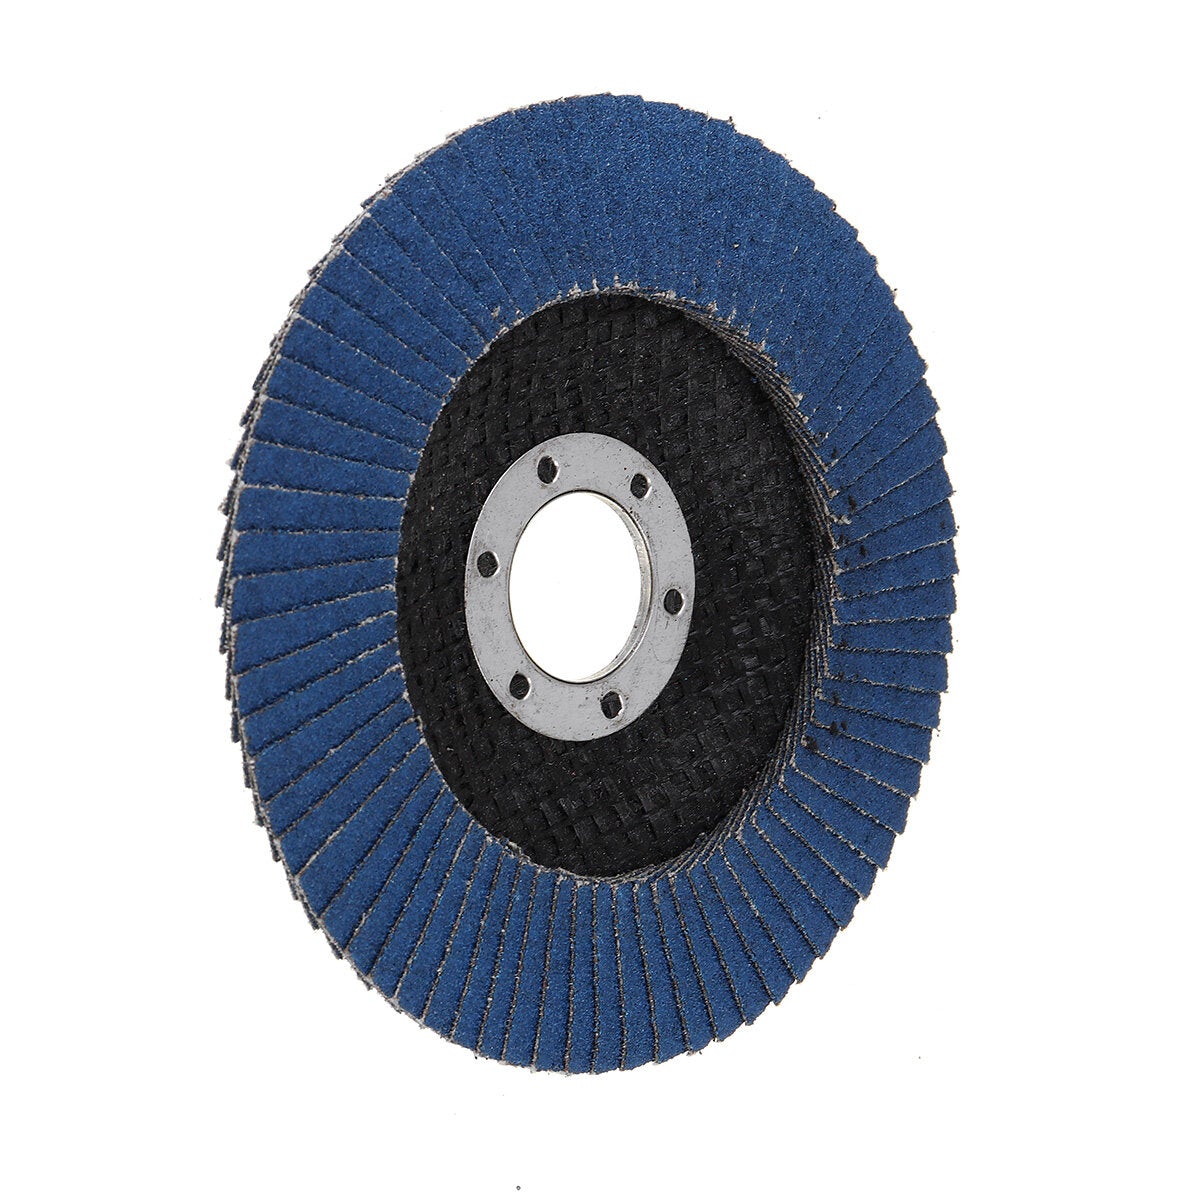 10Pcs 4 Inch Sanding Flap Discs Frosted Sheet Blue Sand 100 Type Louvre Polishing Wheel